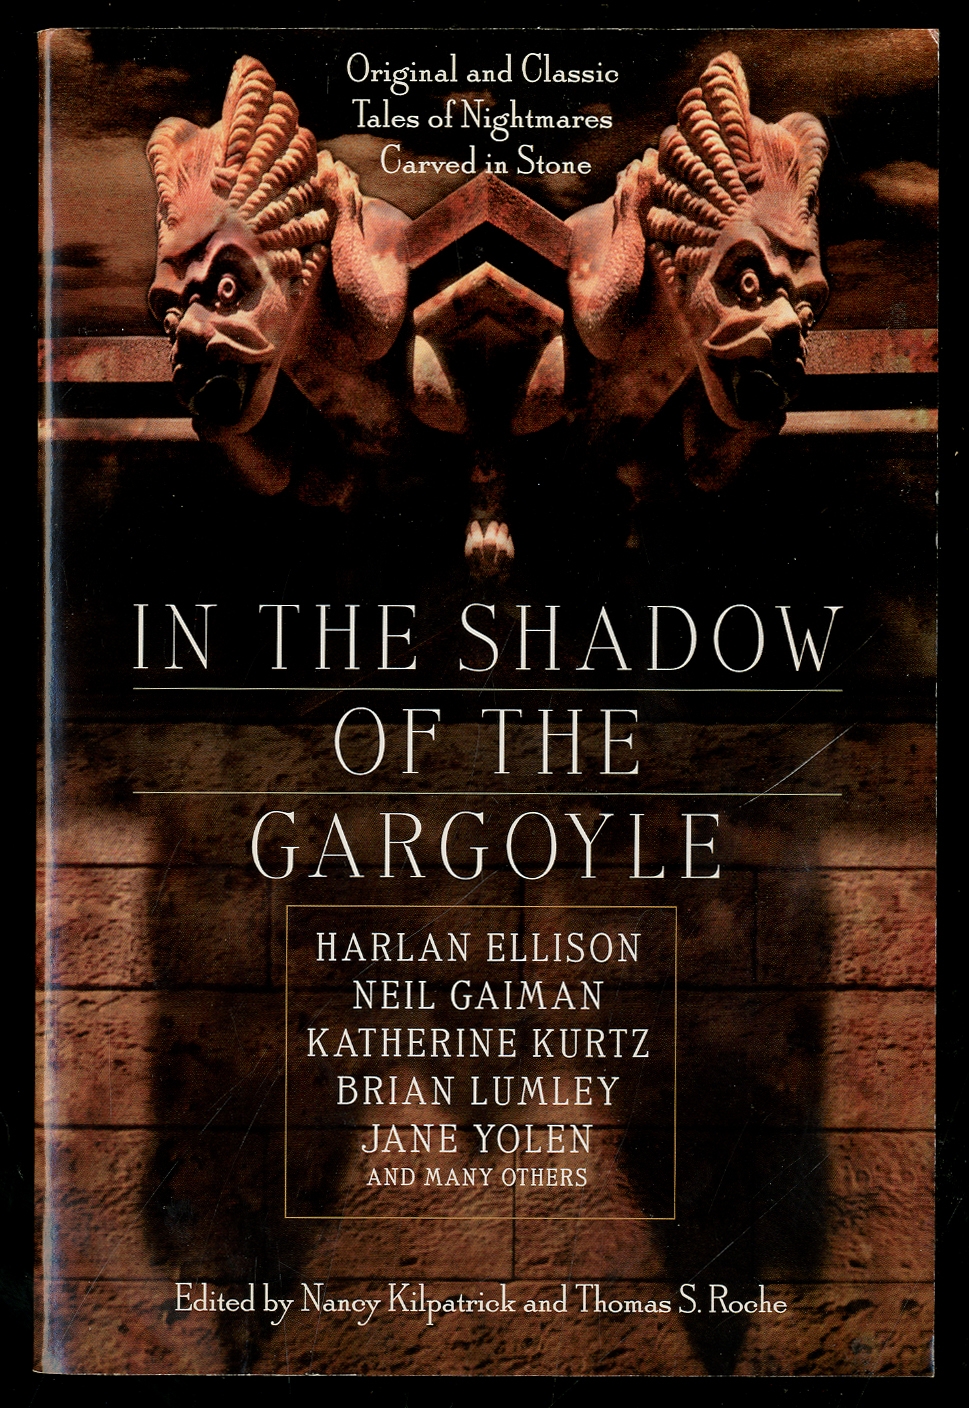 In the Shadow of the Gargoyle - KILPATRICK, Nancy and Thomas S. Roche